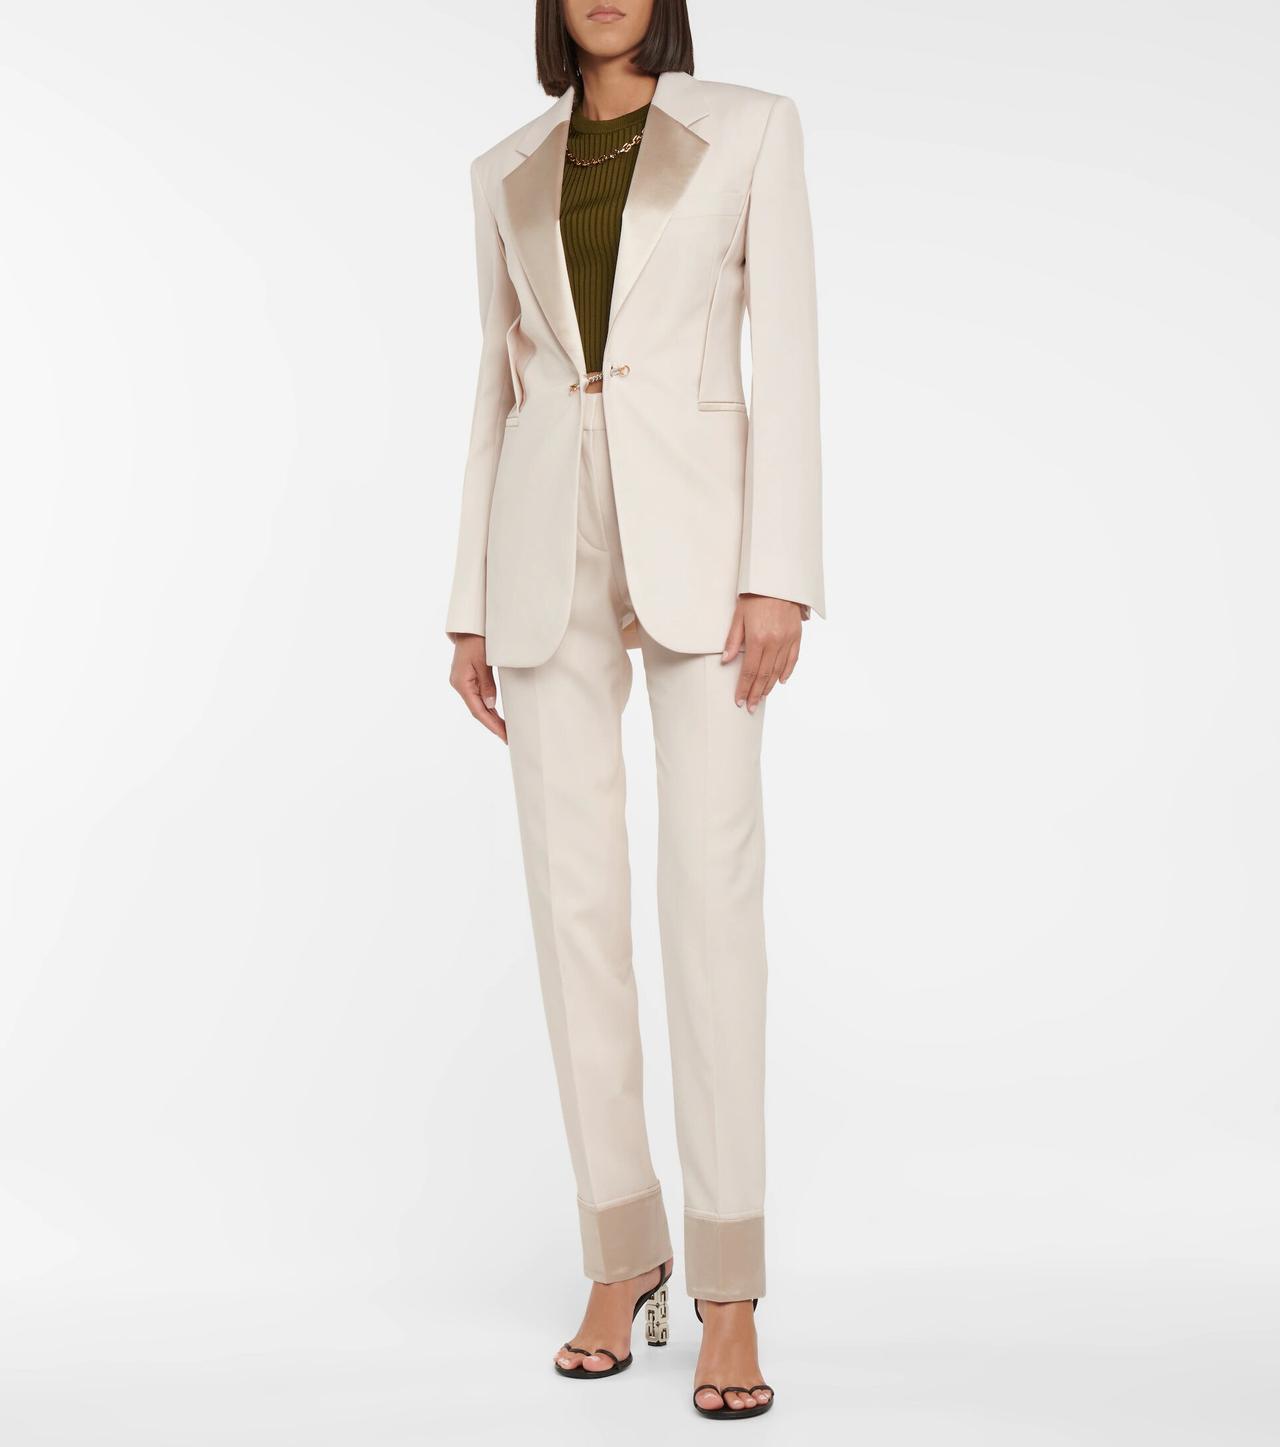 NAKD Structured Trouser Suit Off White Sz EU 34 UK 8 Bnwt Rrp 145  eBay